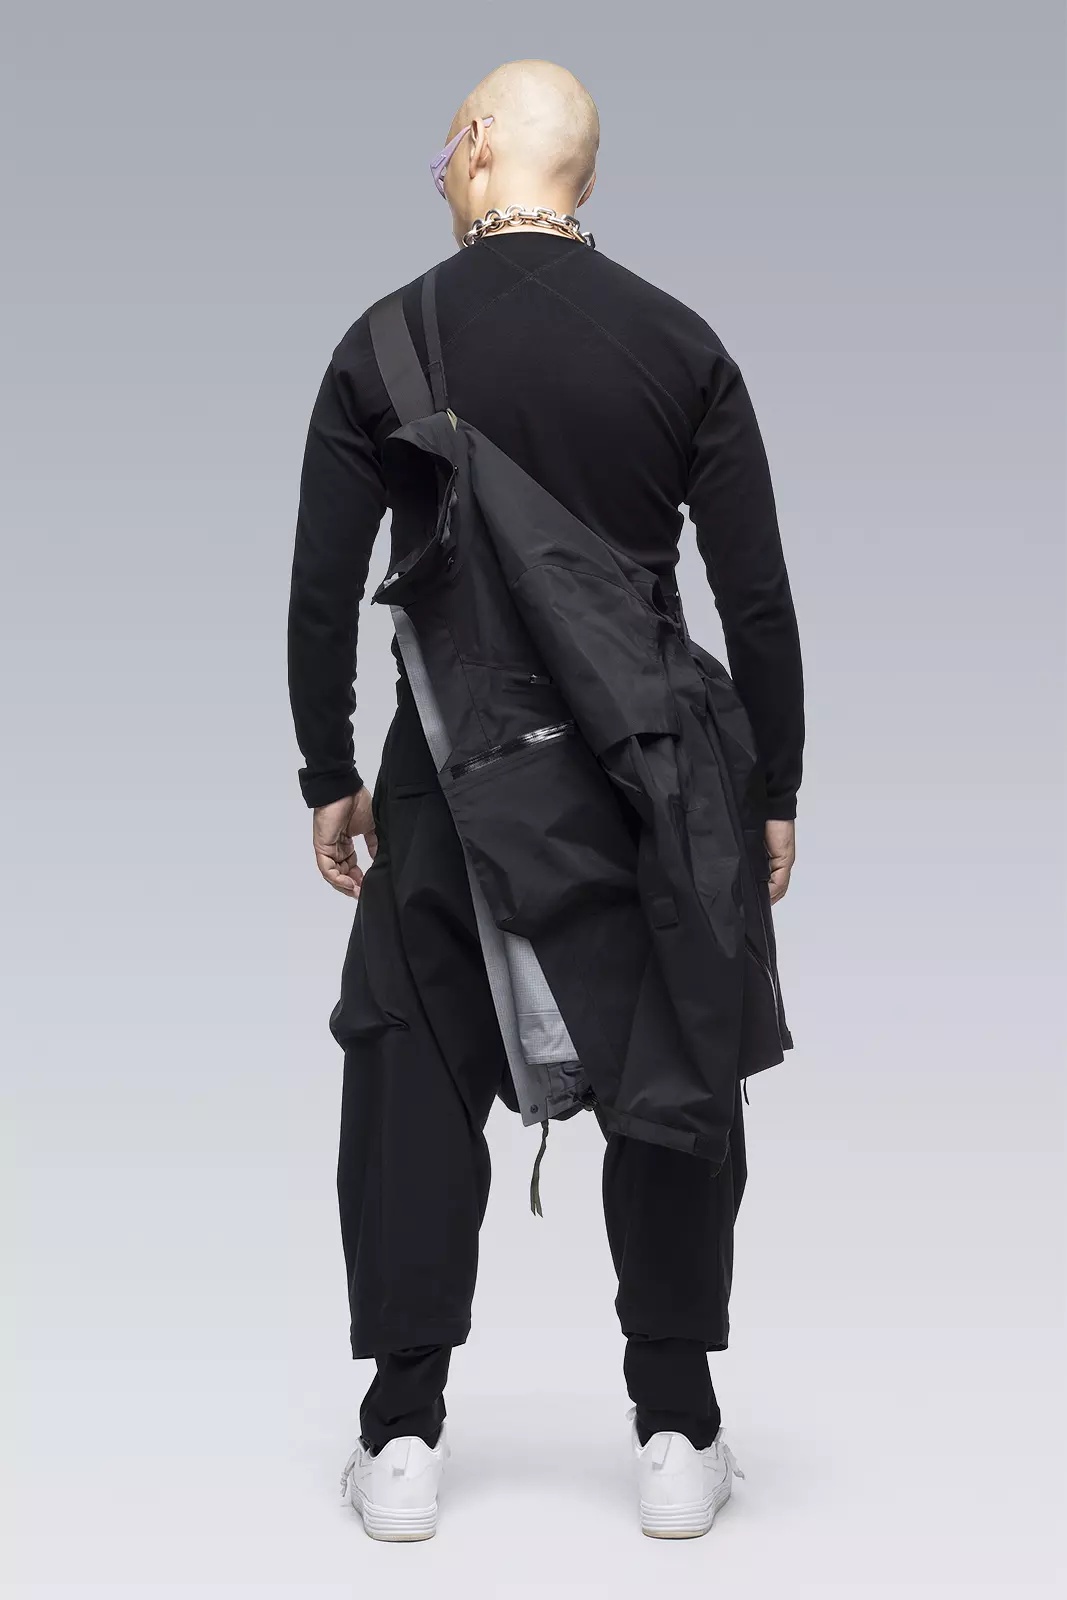 J1A-GTKR-BKS KR EX 3L Gore-Tex® Pro Interops Jacket Black with size 5 WR zippers in gloss black - 42